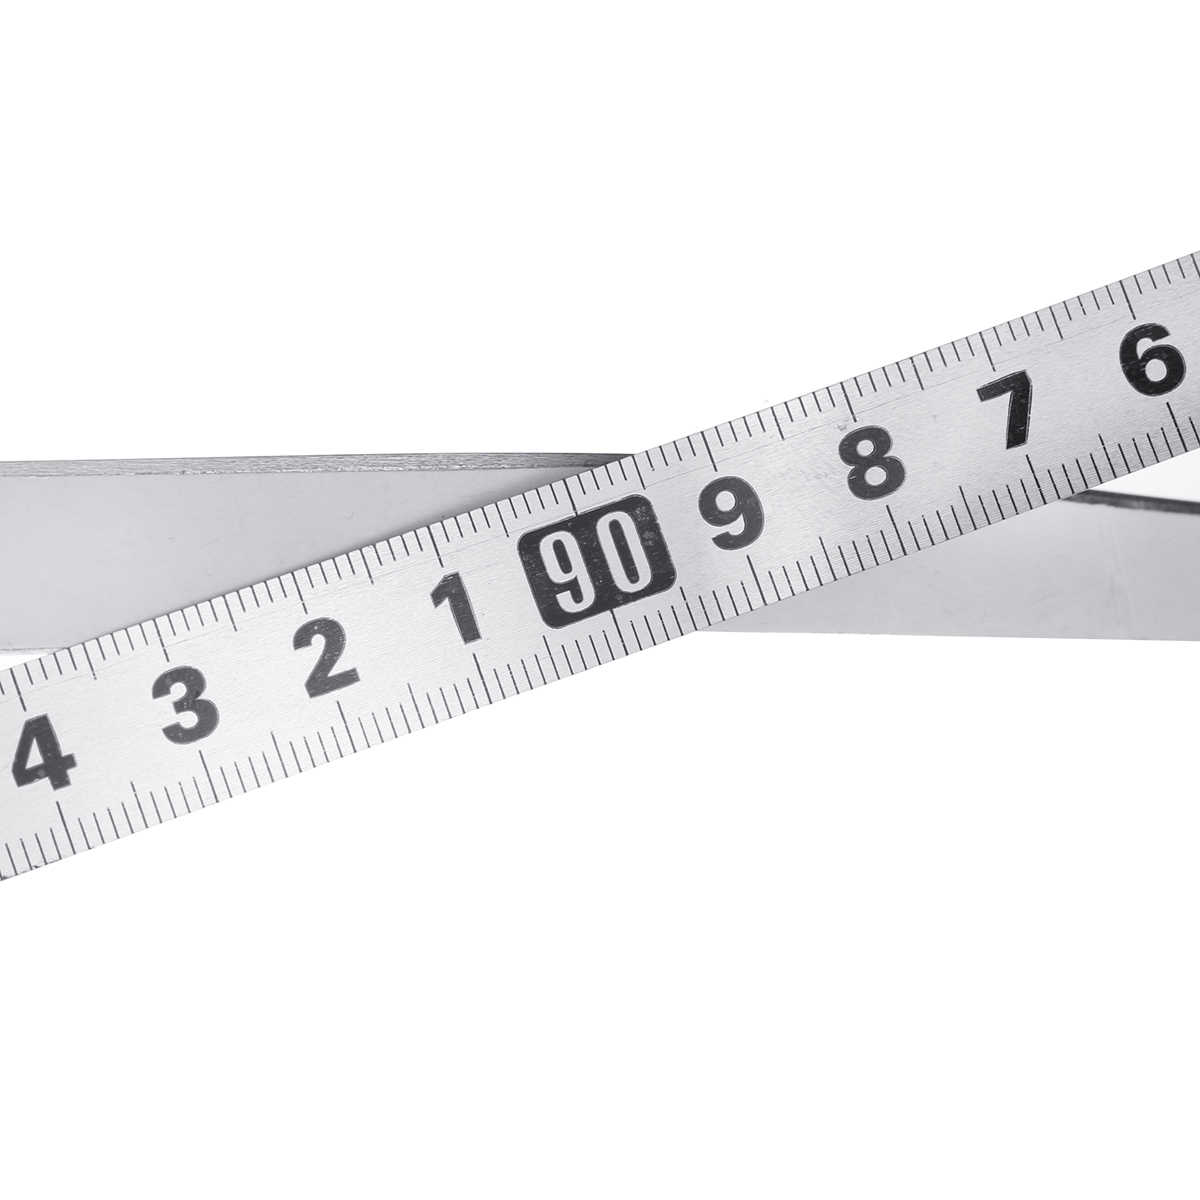 123-Meters-Stainless-Steel-Miter-Track-Tape-Measure-Self-Adhesive-Metric-Scale-Straight-Ruler-1625019-6